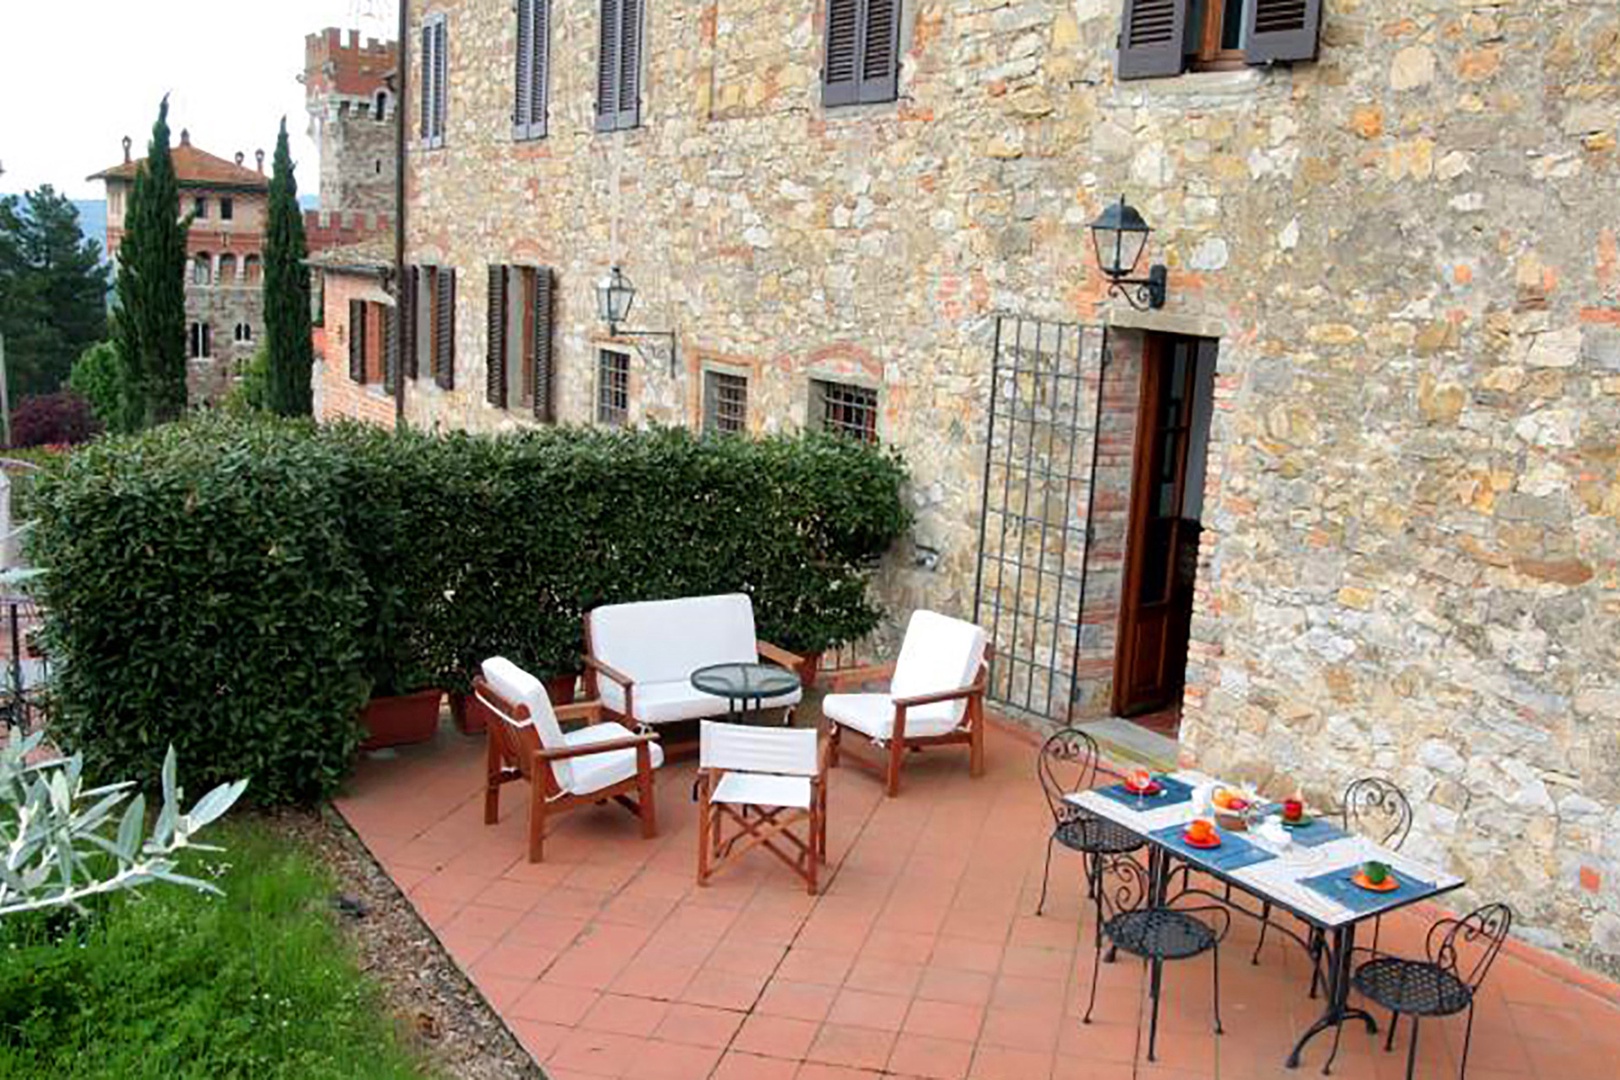 The Poggio apartment terrace provides the ultimate Tuscany experience.